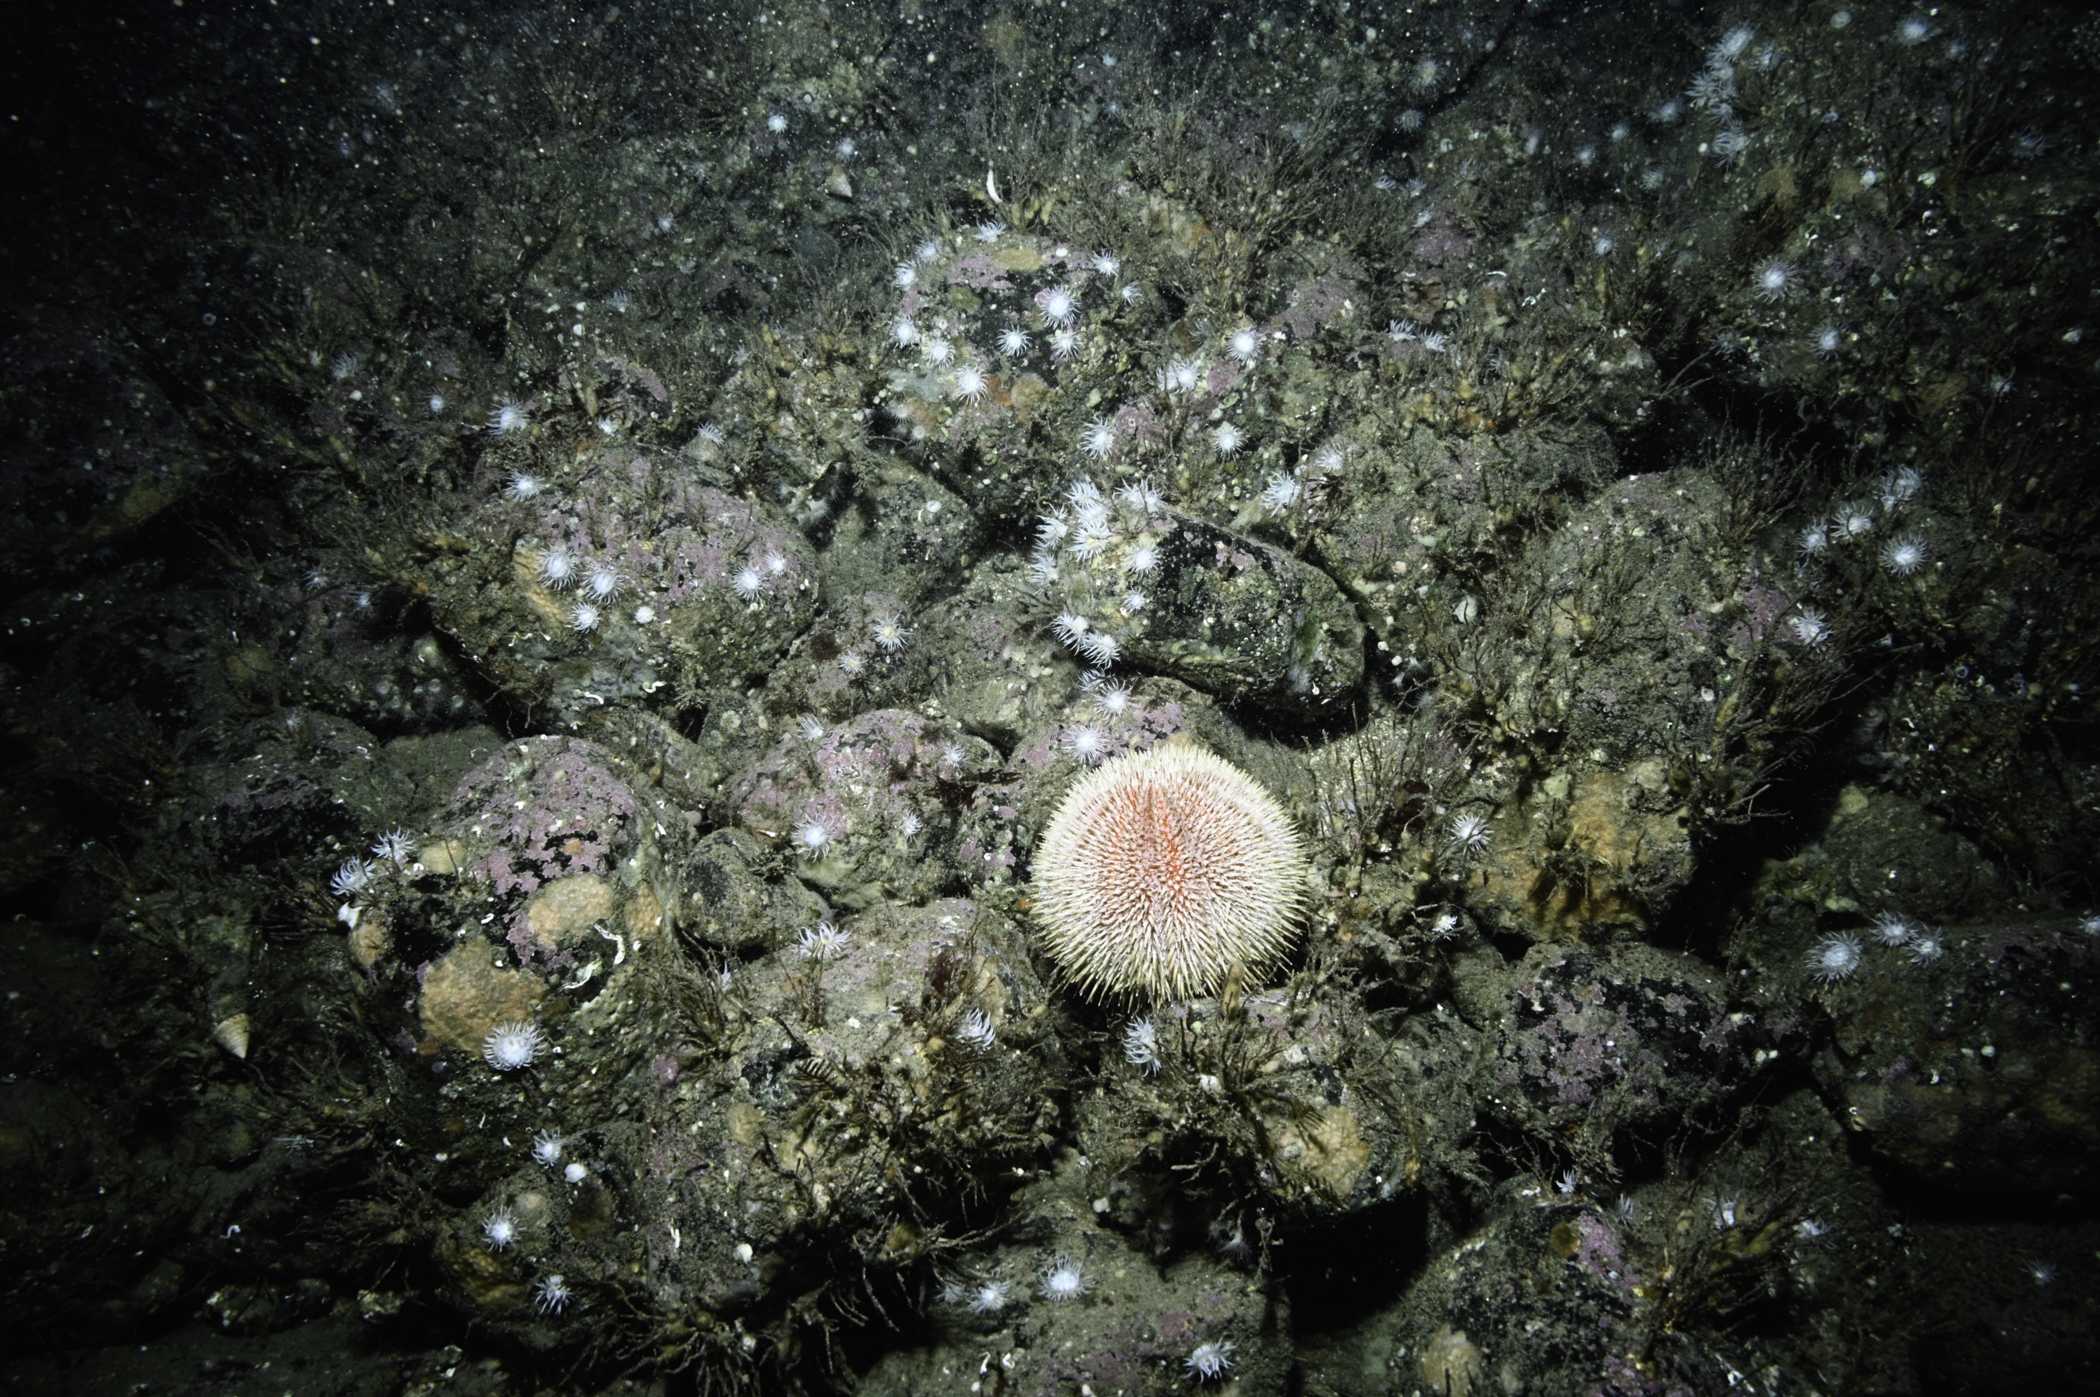 Actinothoe sphyrodeta, Echinus esculentus. Site: S Bull Point, Rathlin Island. 